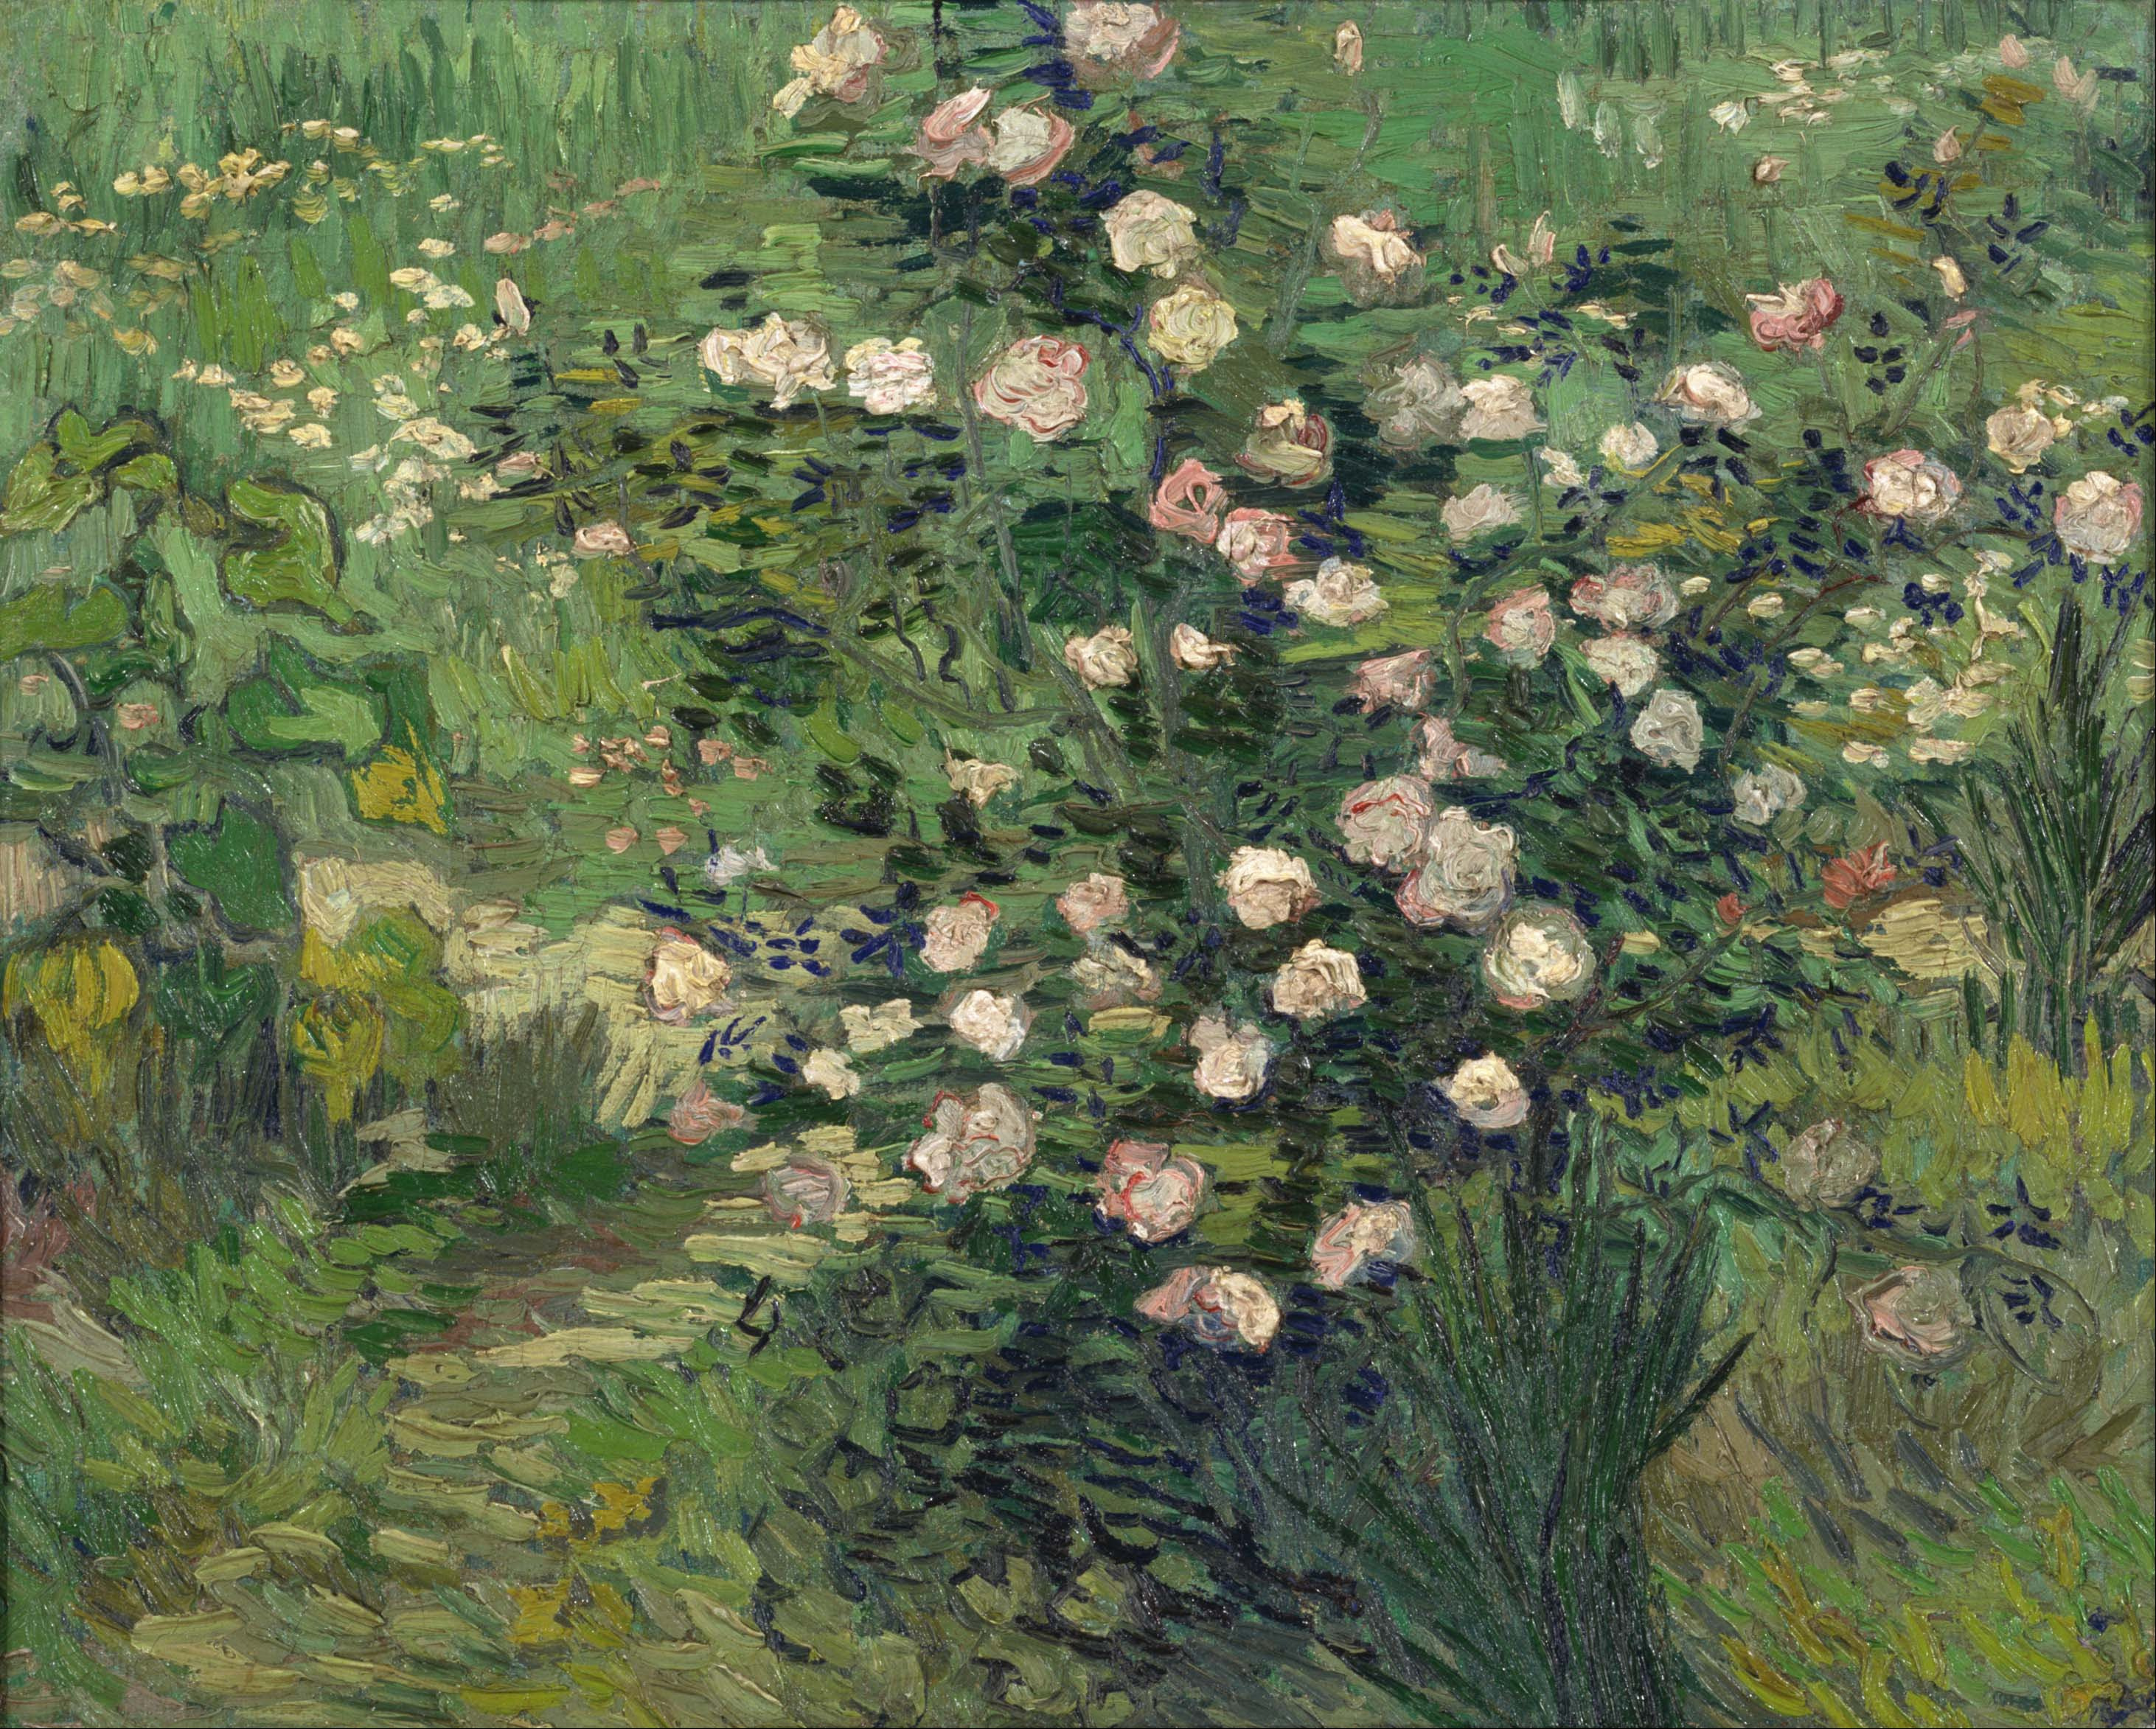 Róże by Vincent van Gogh - 1889 - 41.3 x 33.0 cm 